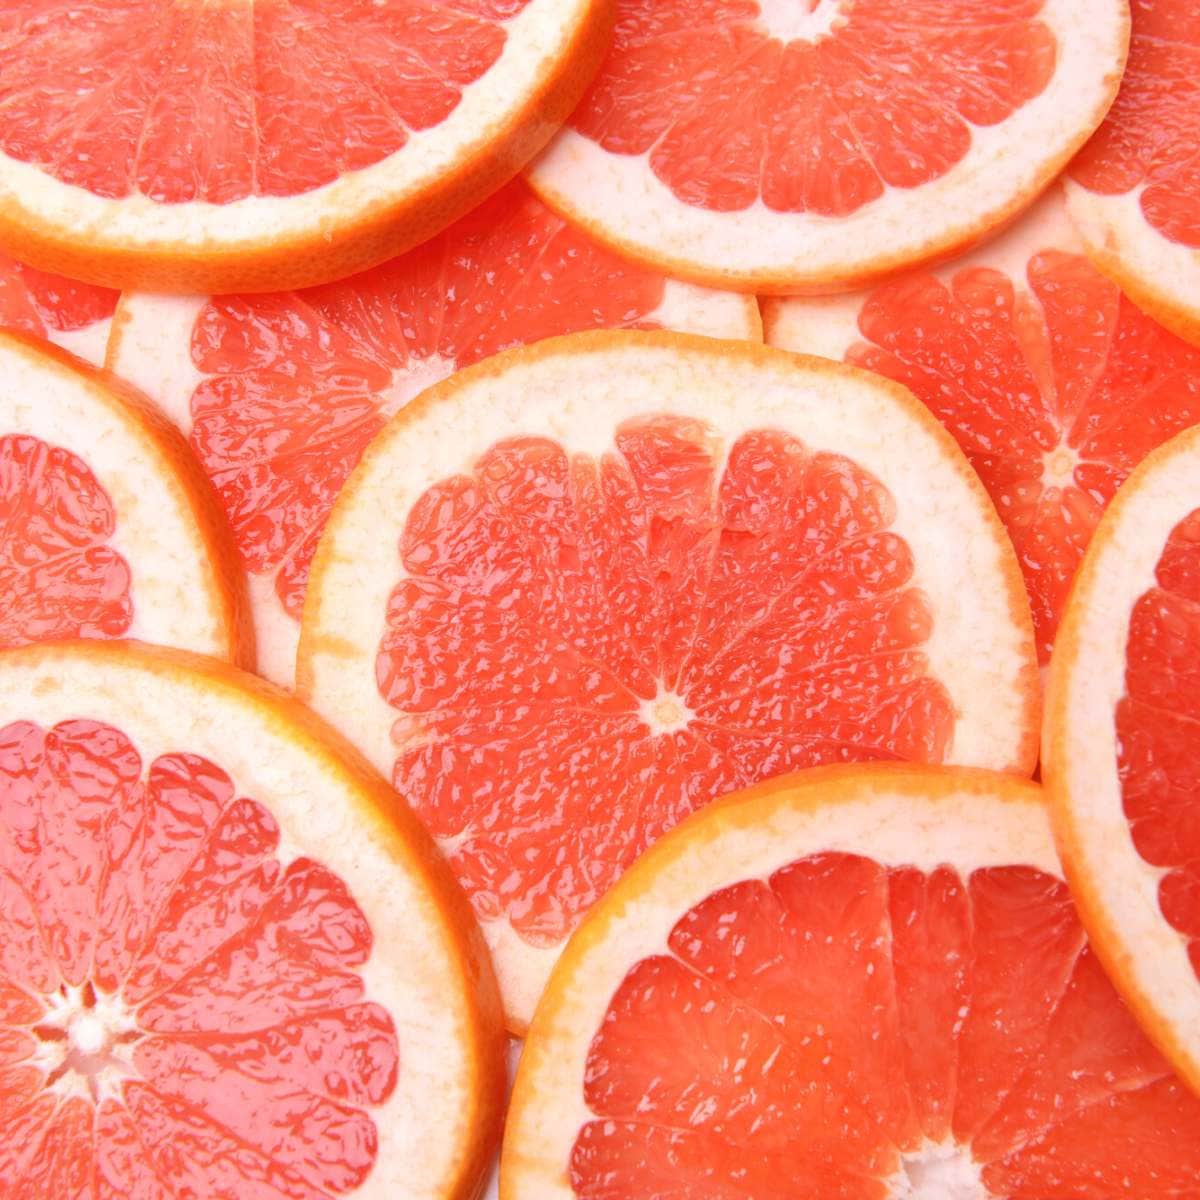 Slices of grapefruit.